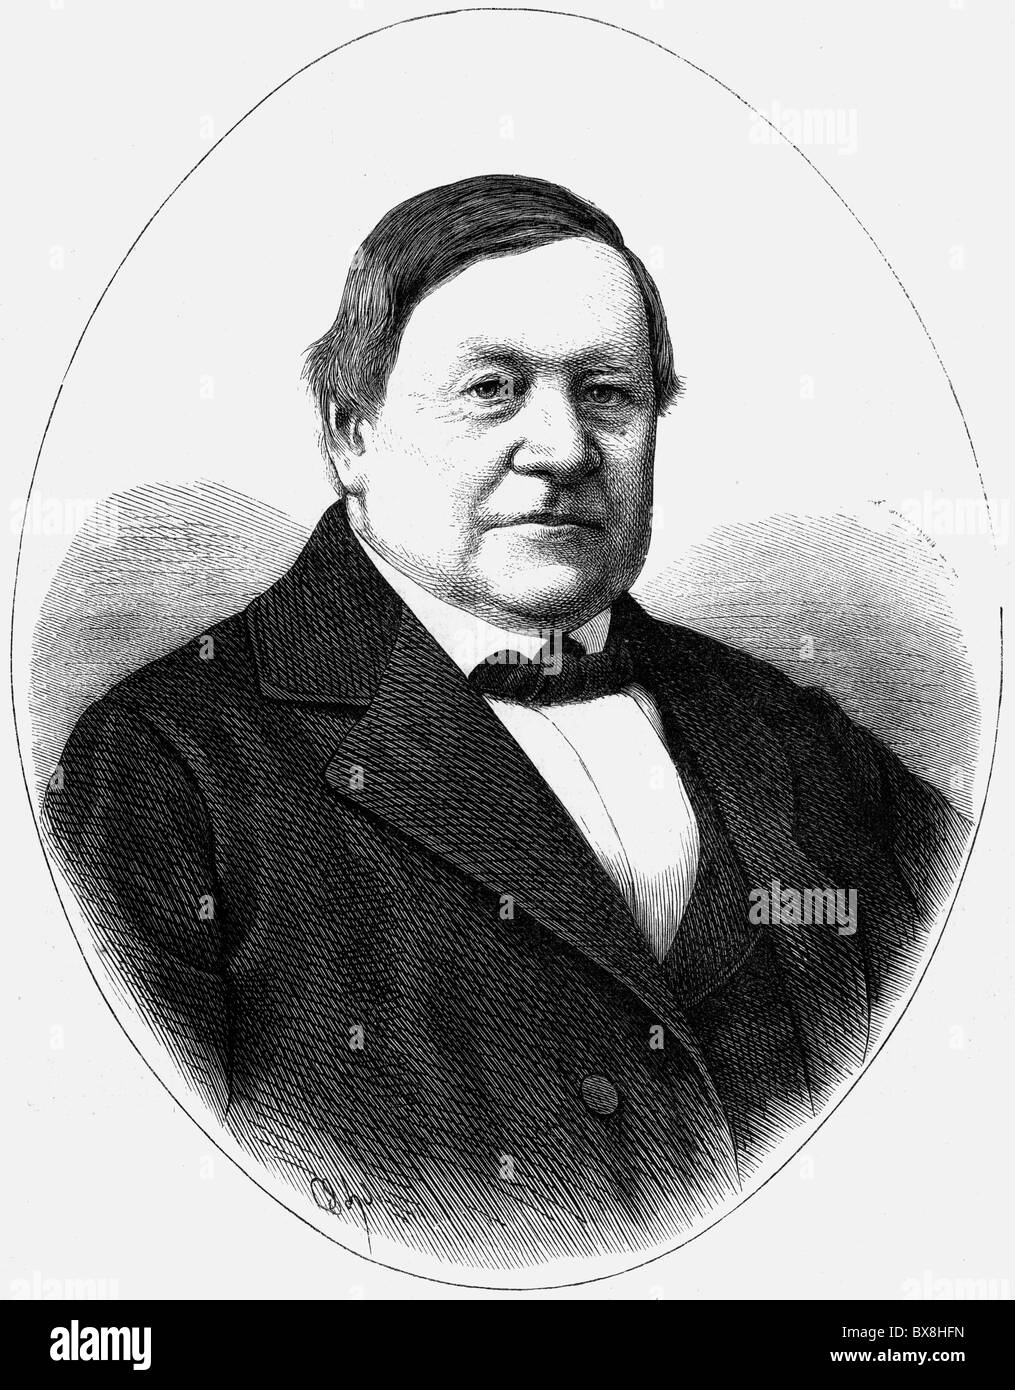 Hahn, Heinrich Wilhelm, 9.1.1795 - 19.4.1873, German bookseller, portrait, wood engraving, published in 1869, Stock Photo